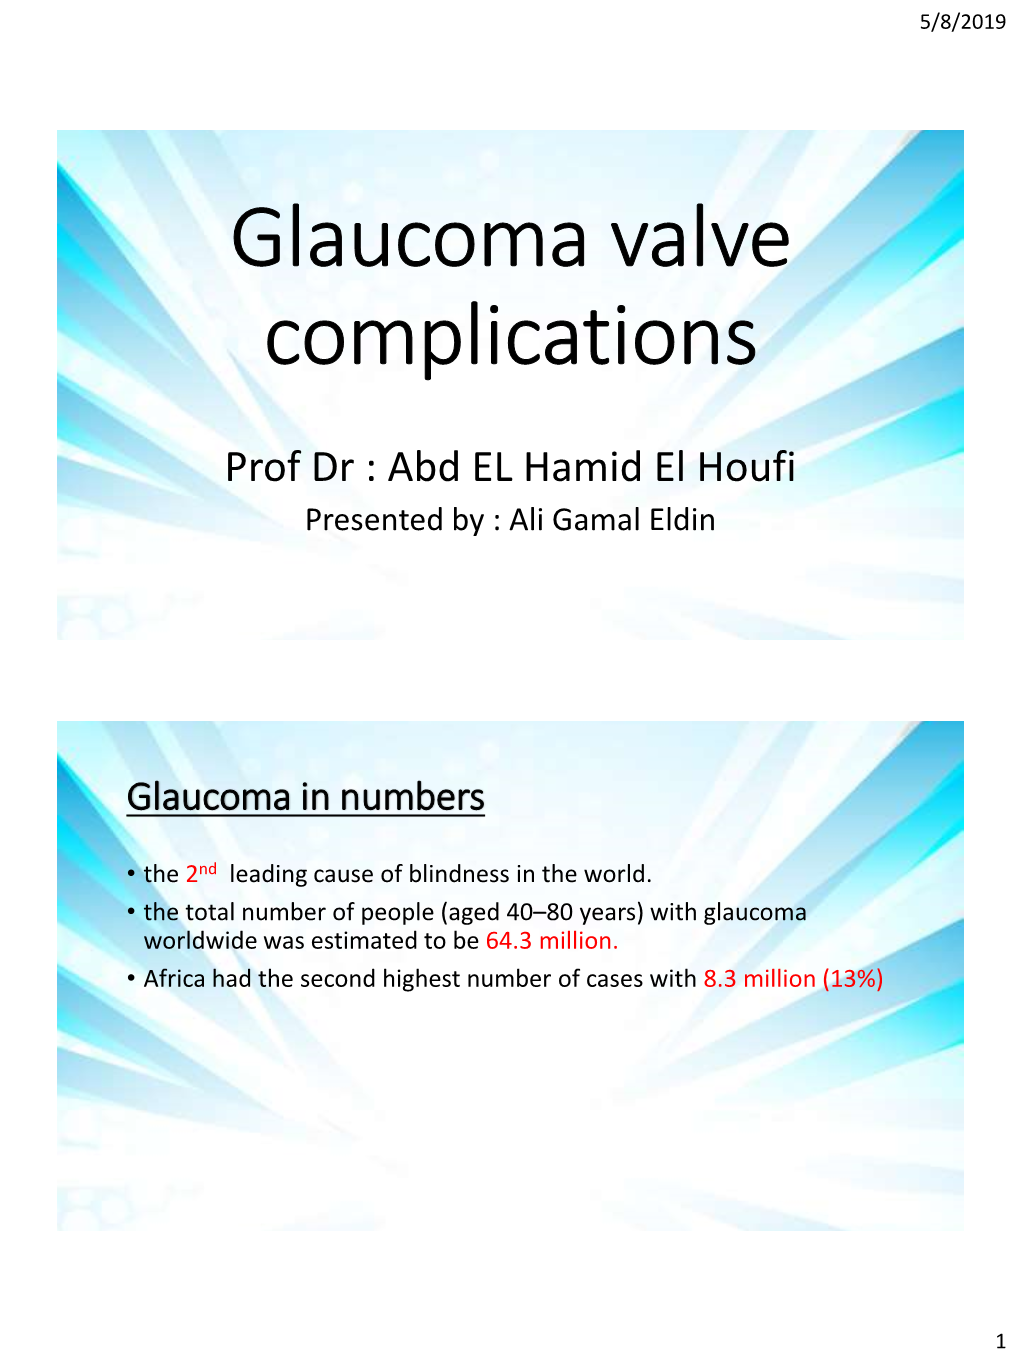 Glaucoma Valve Complications